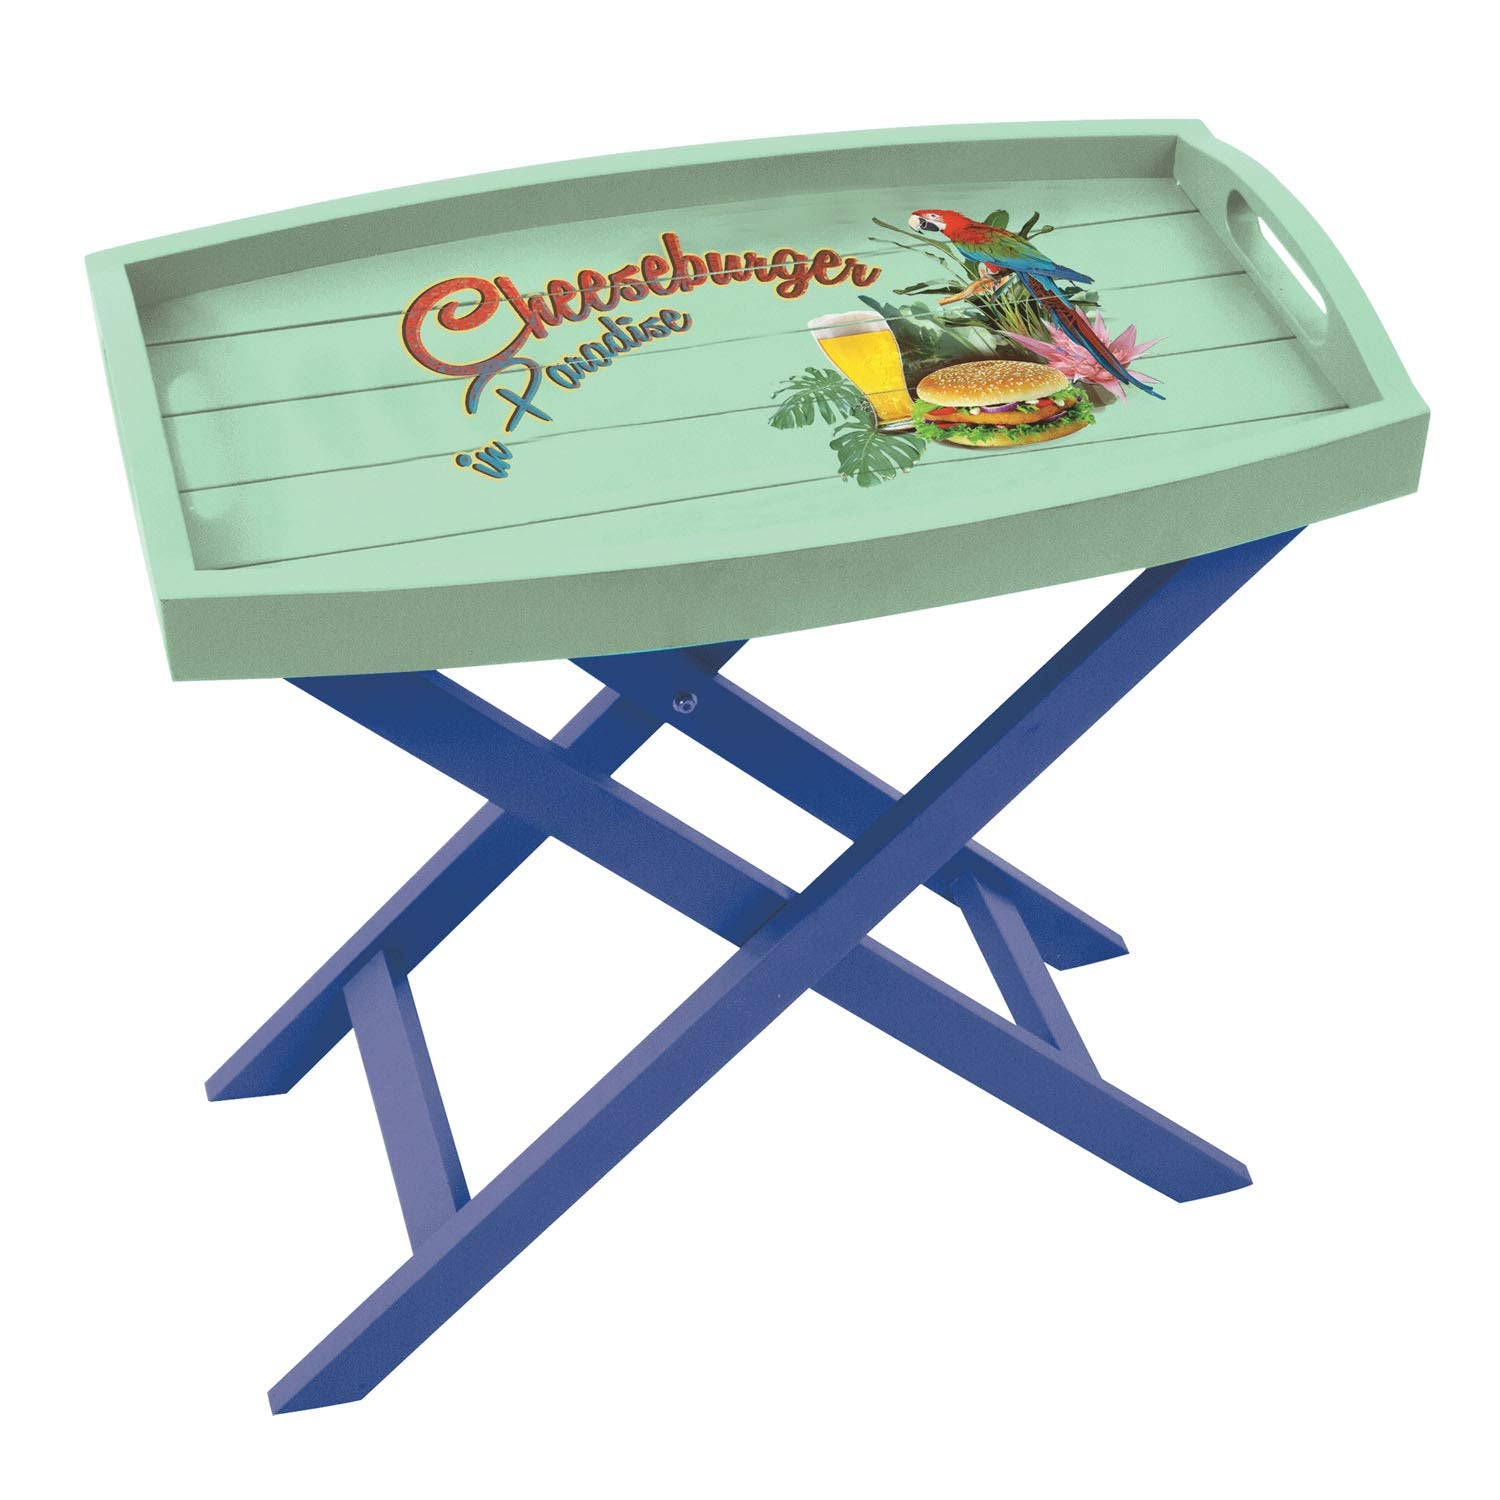 Margaritaville "Cheeseburger in Paradise Outdoor Butler Tray Table - Light Green